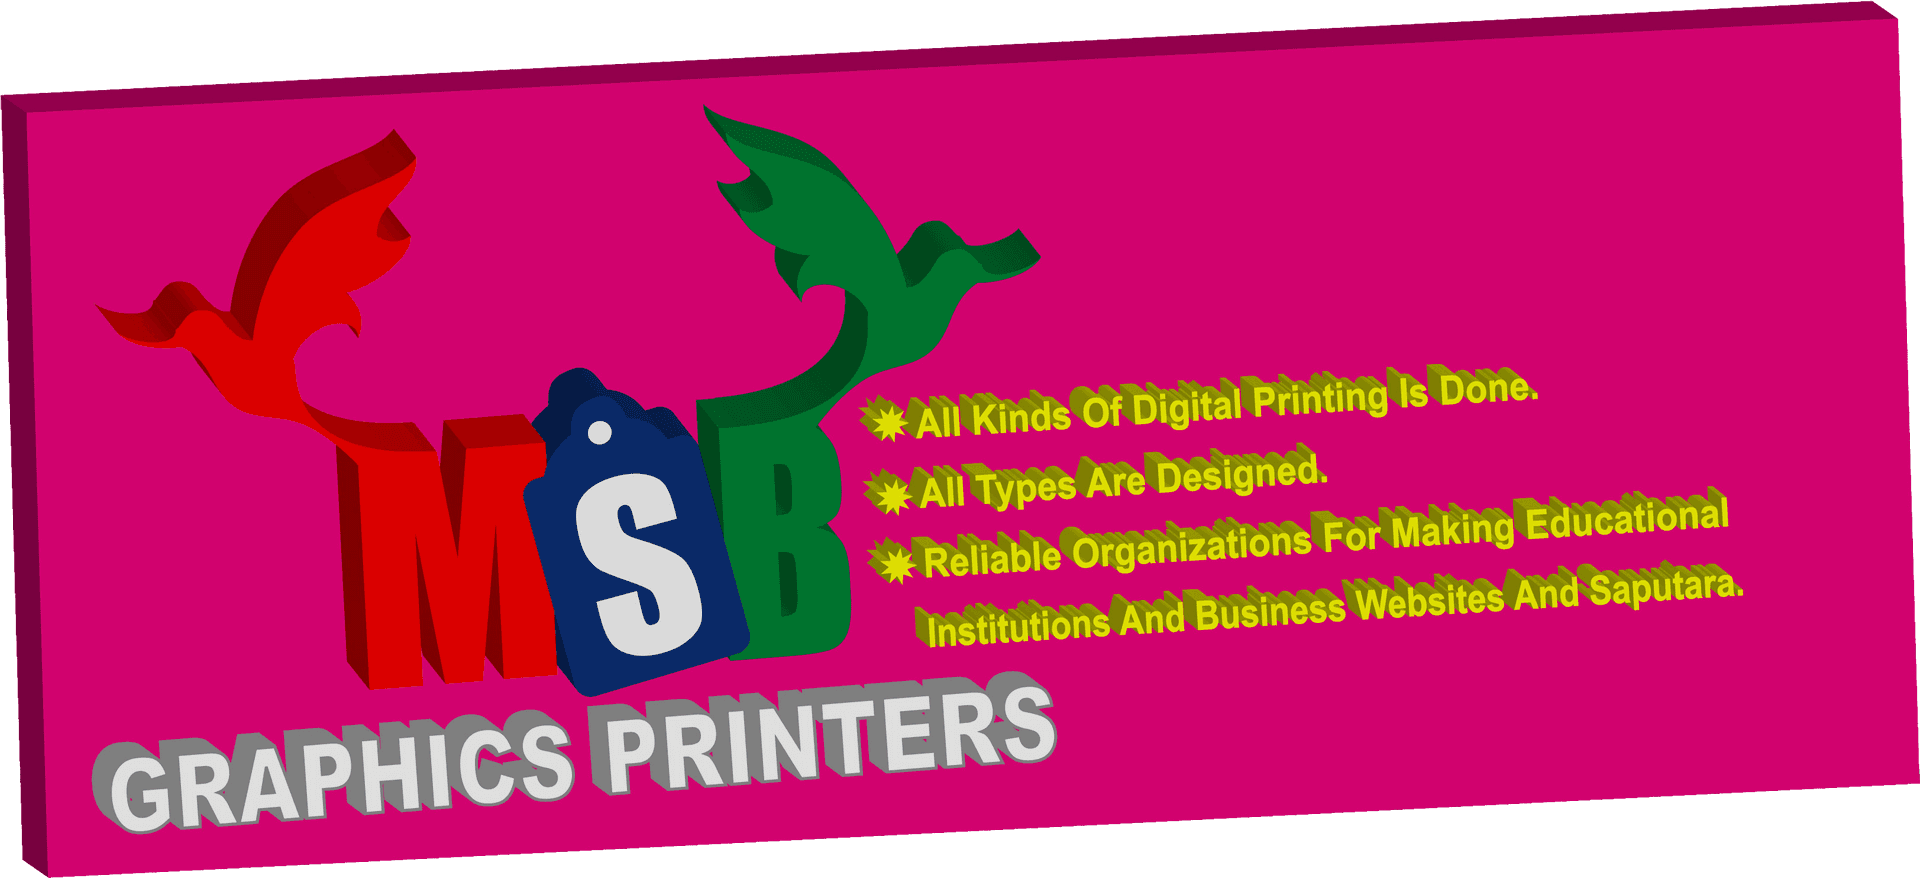 M S B Graphics Printers Signage PNG image